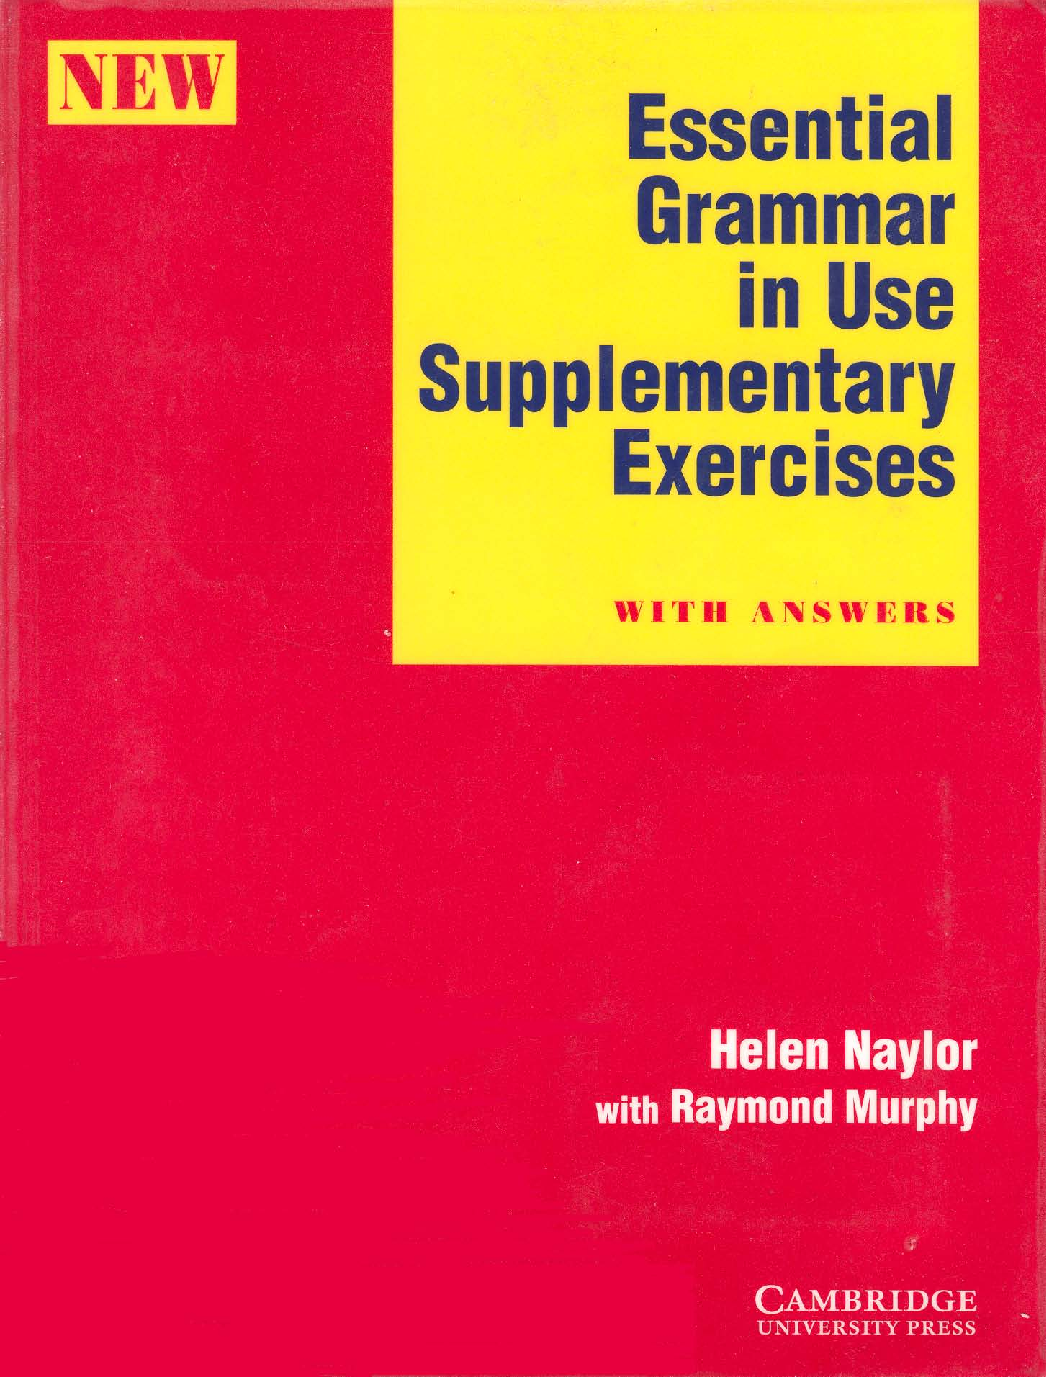 Sách Essential Grammar in Use Supplementary Exercises | Xem online, tải PDF miễn phí (trang 1)